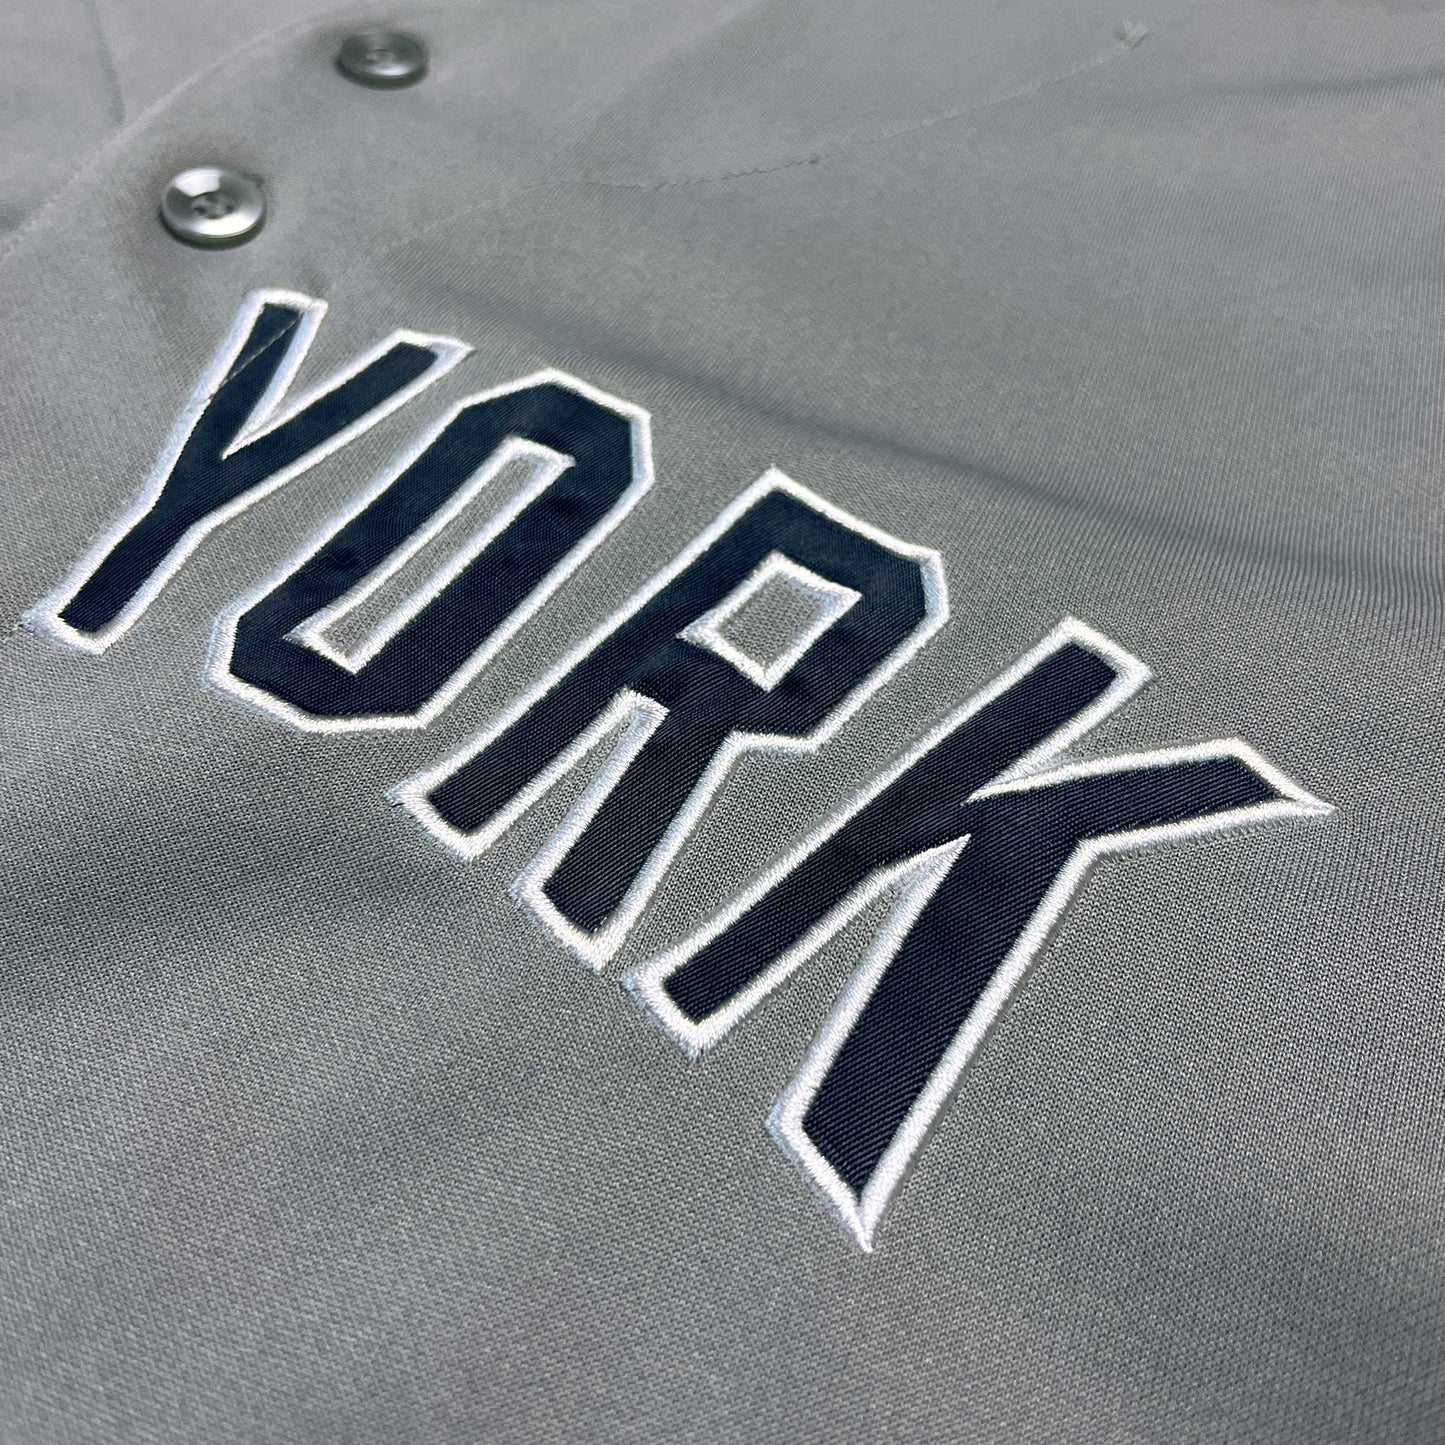 New York Yankees - Größe M - Majestic - MLB Trikot